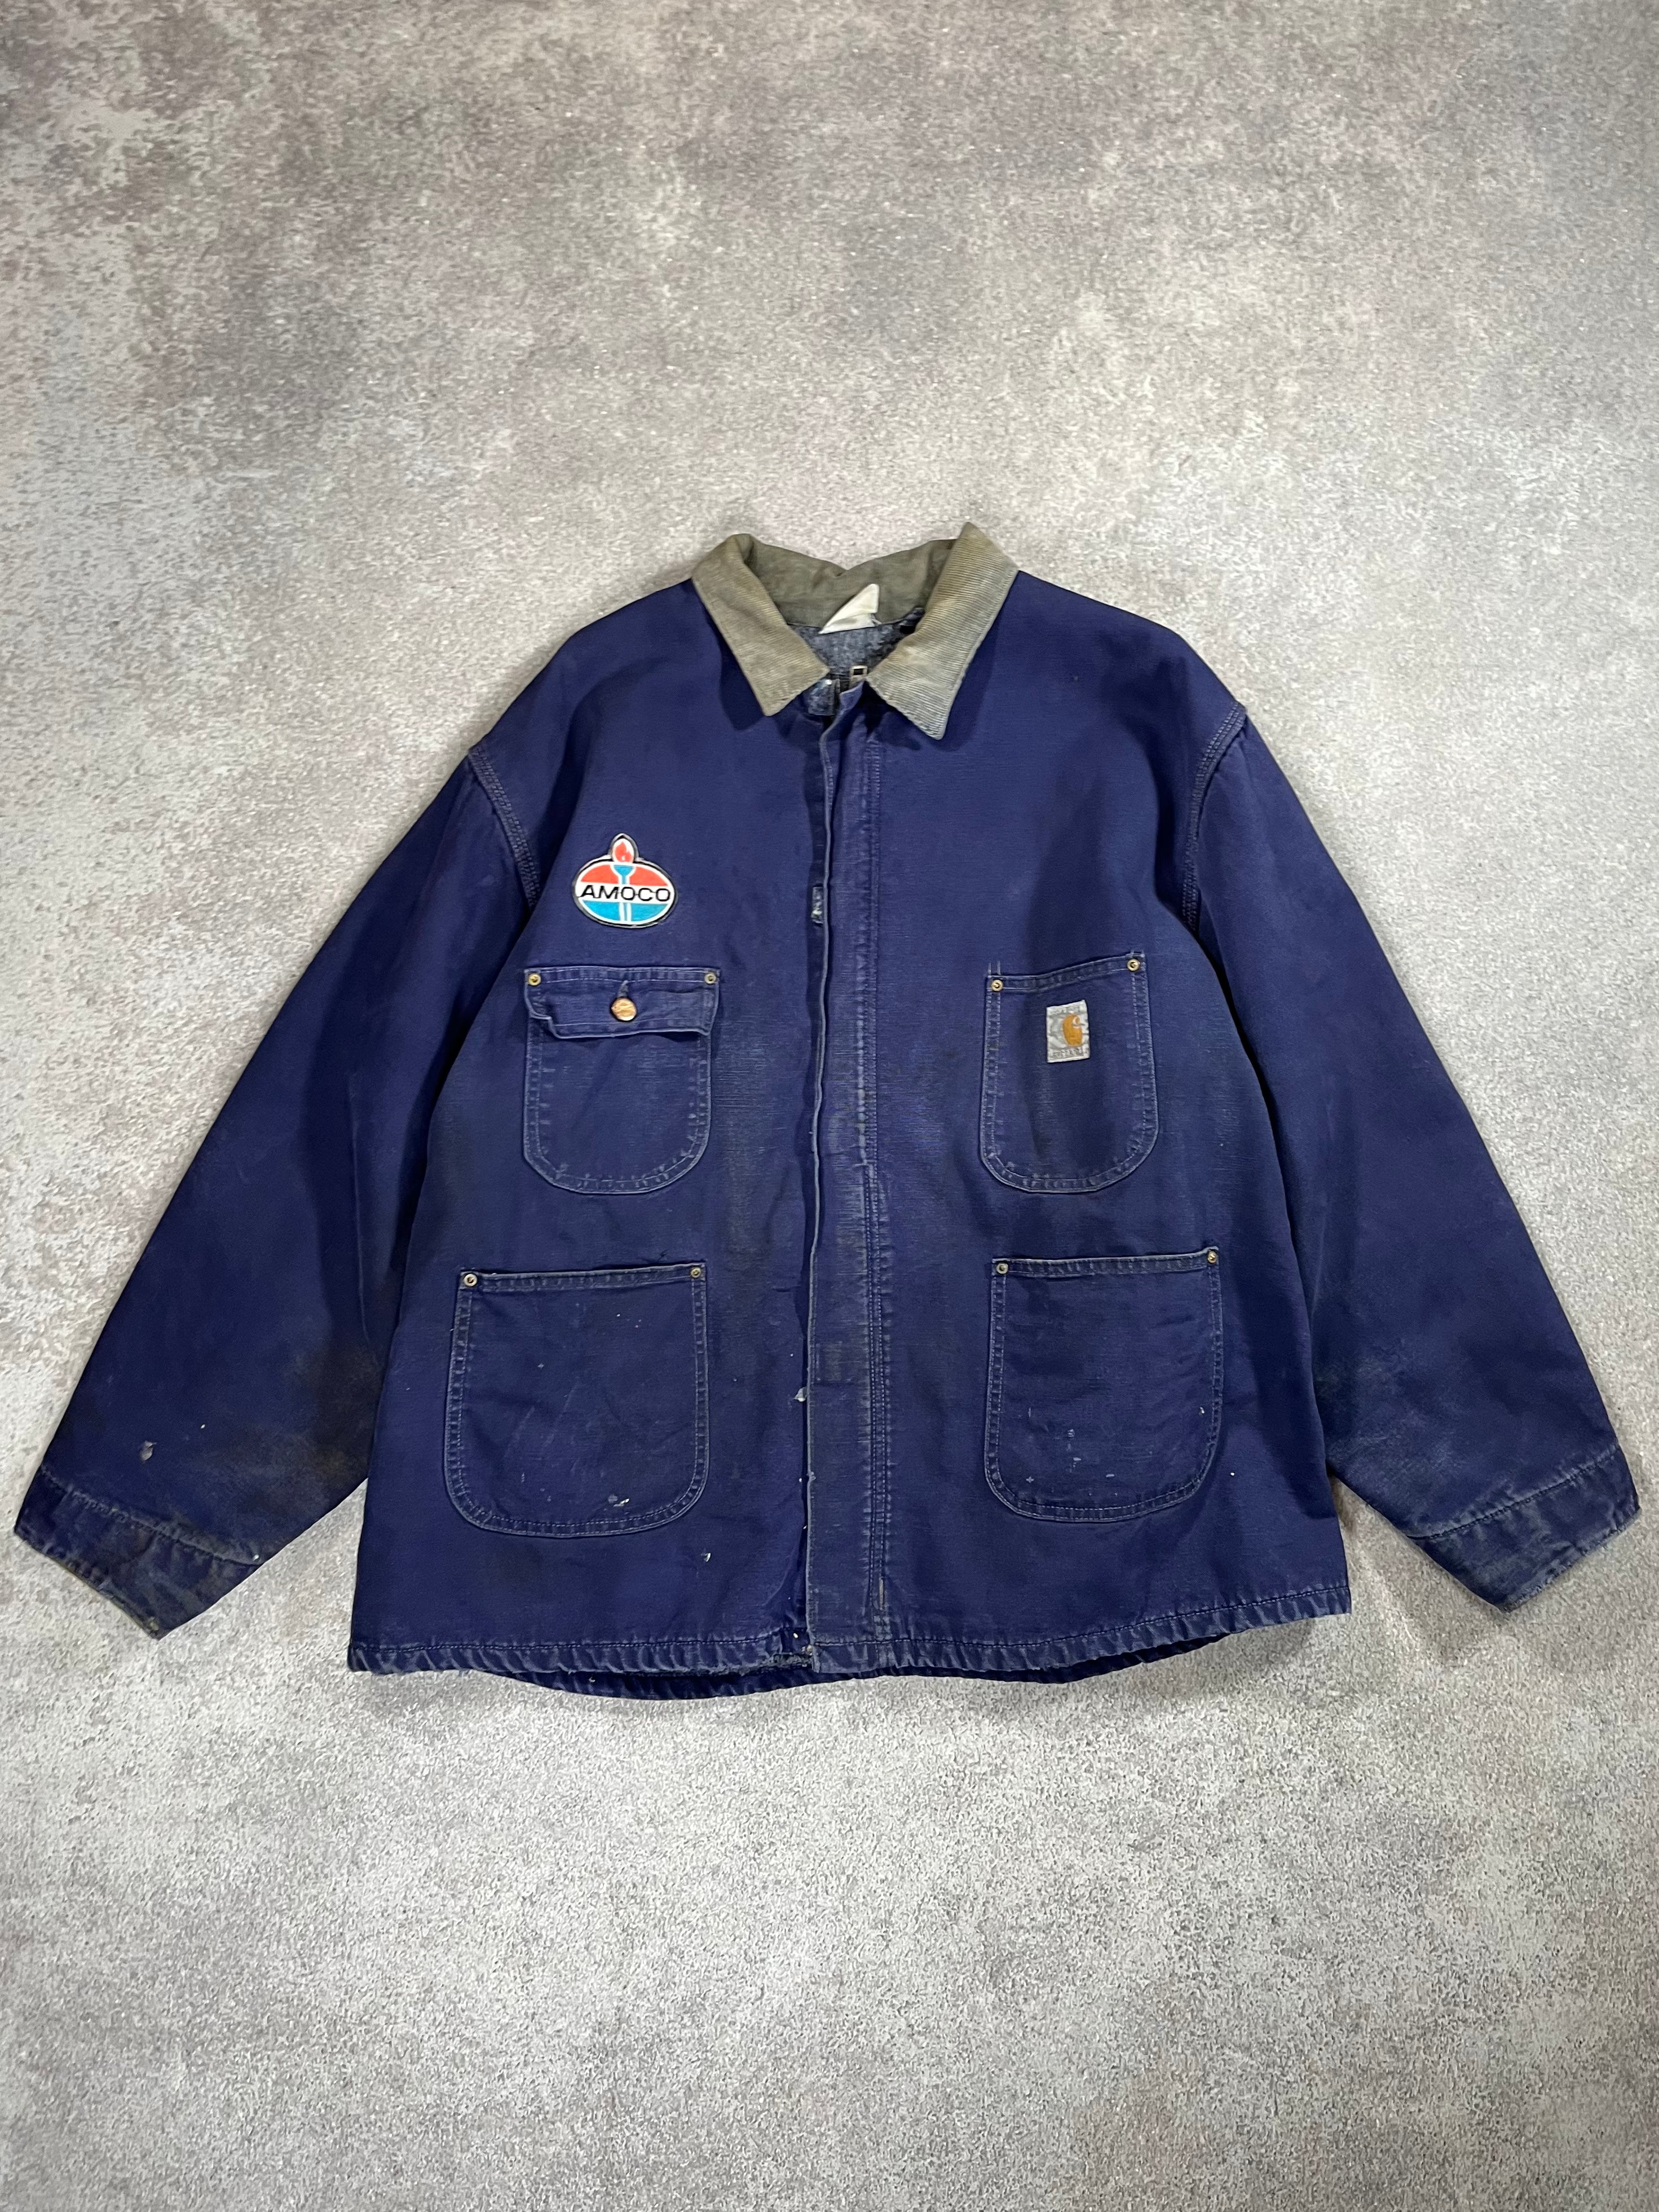 Carhartt Work Jacket Blue // X-Large - RHAGHOUSE VINTAGE